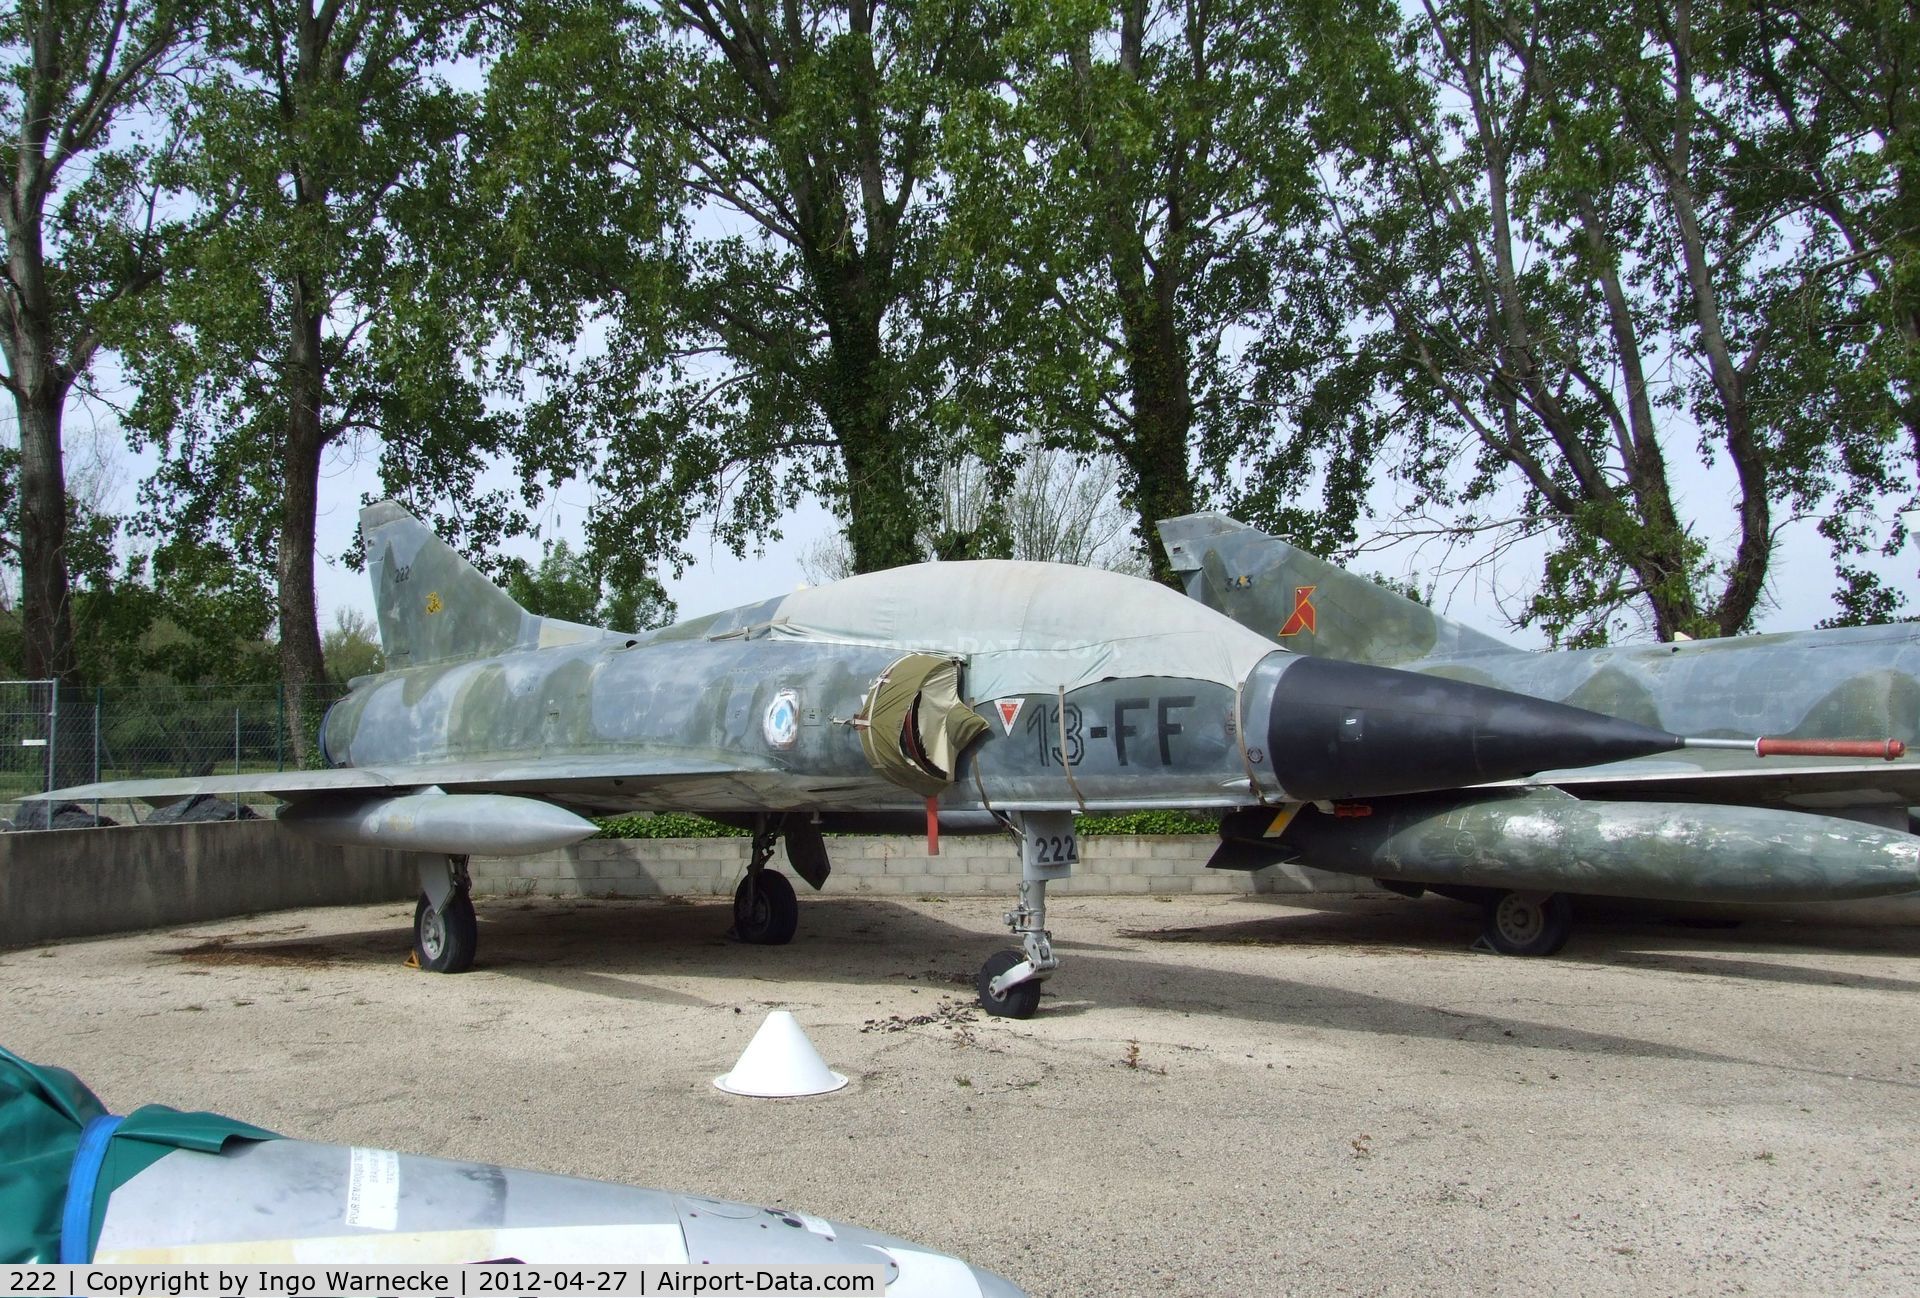 222, Dassault Mirage IIIB C/N 222, Dassault Mirage III B at the Musee Aeronautique, Orange